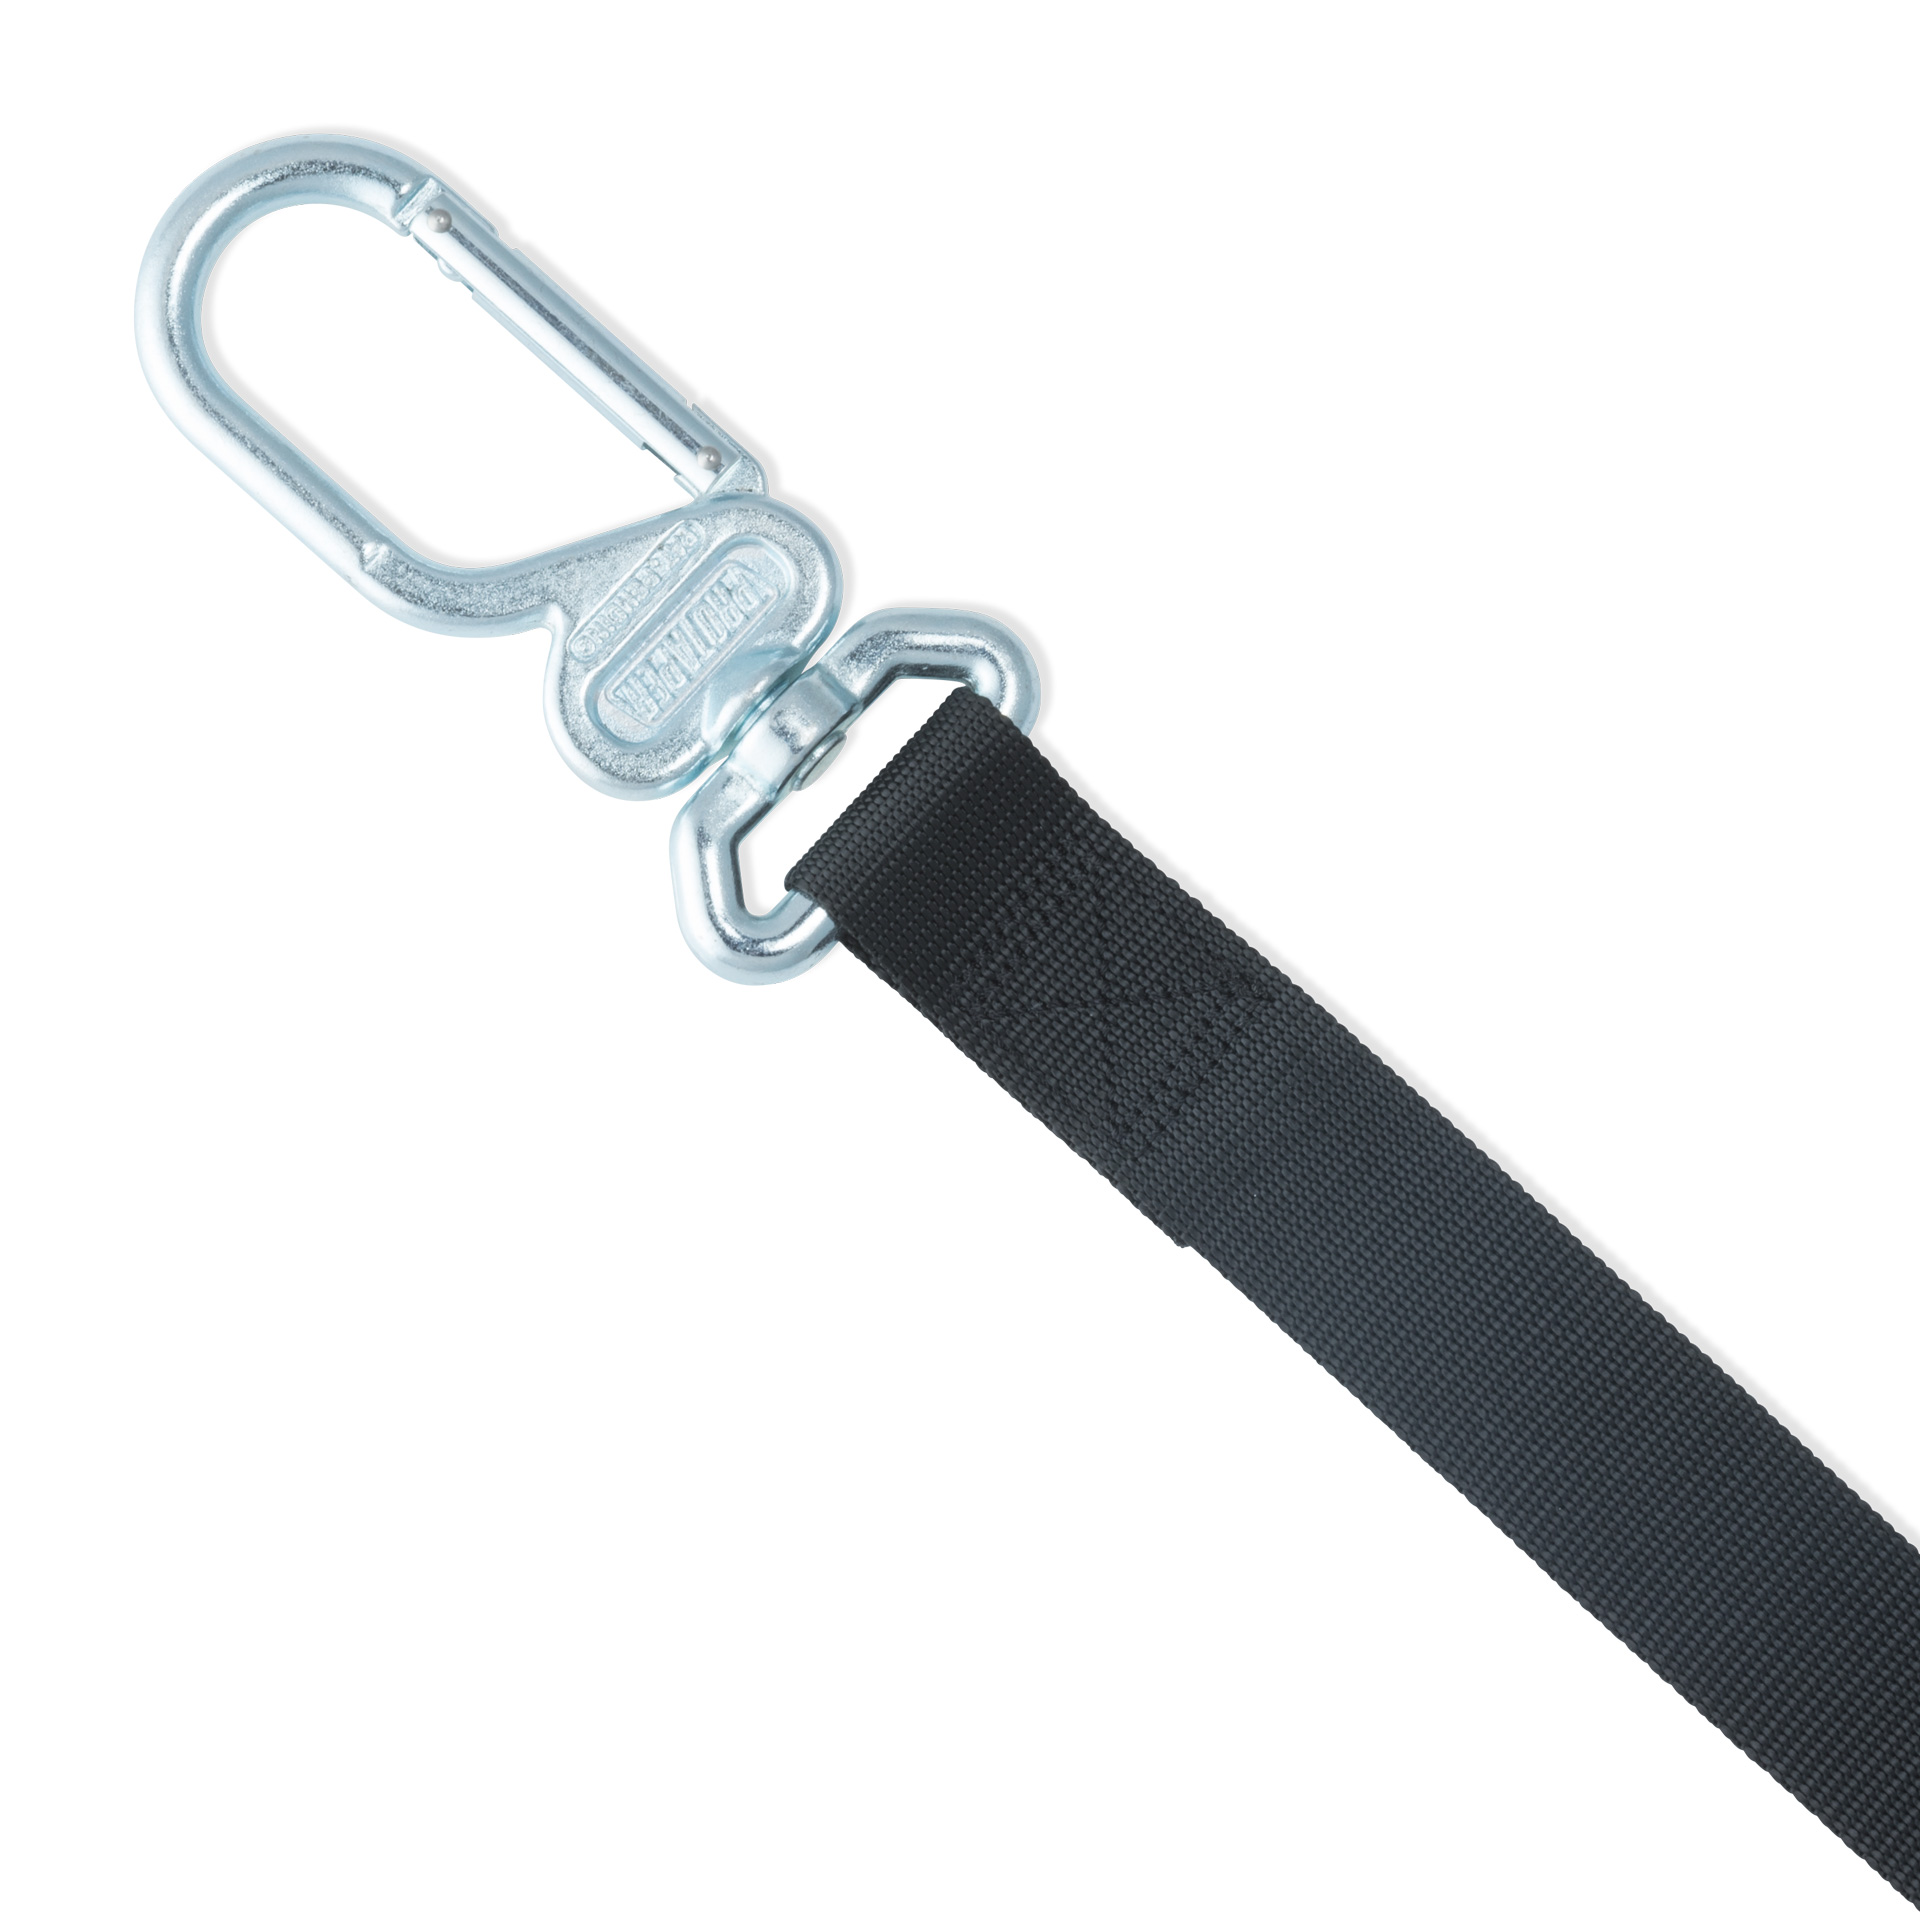 Swivel Carabiner Tie-Downs | Tie-Downs | Accessories | ProTaper.com